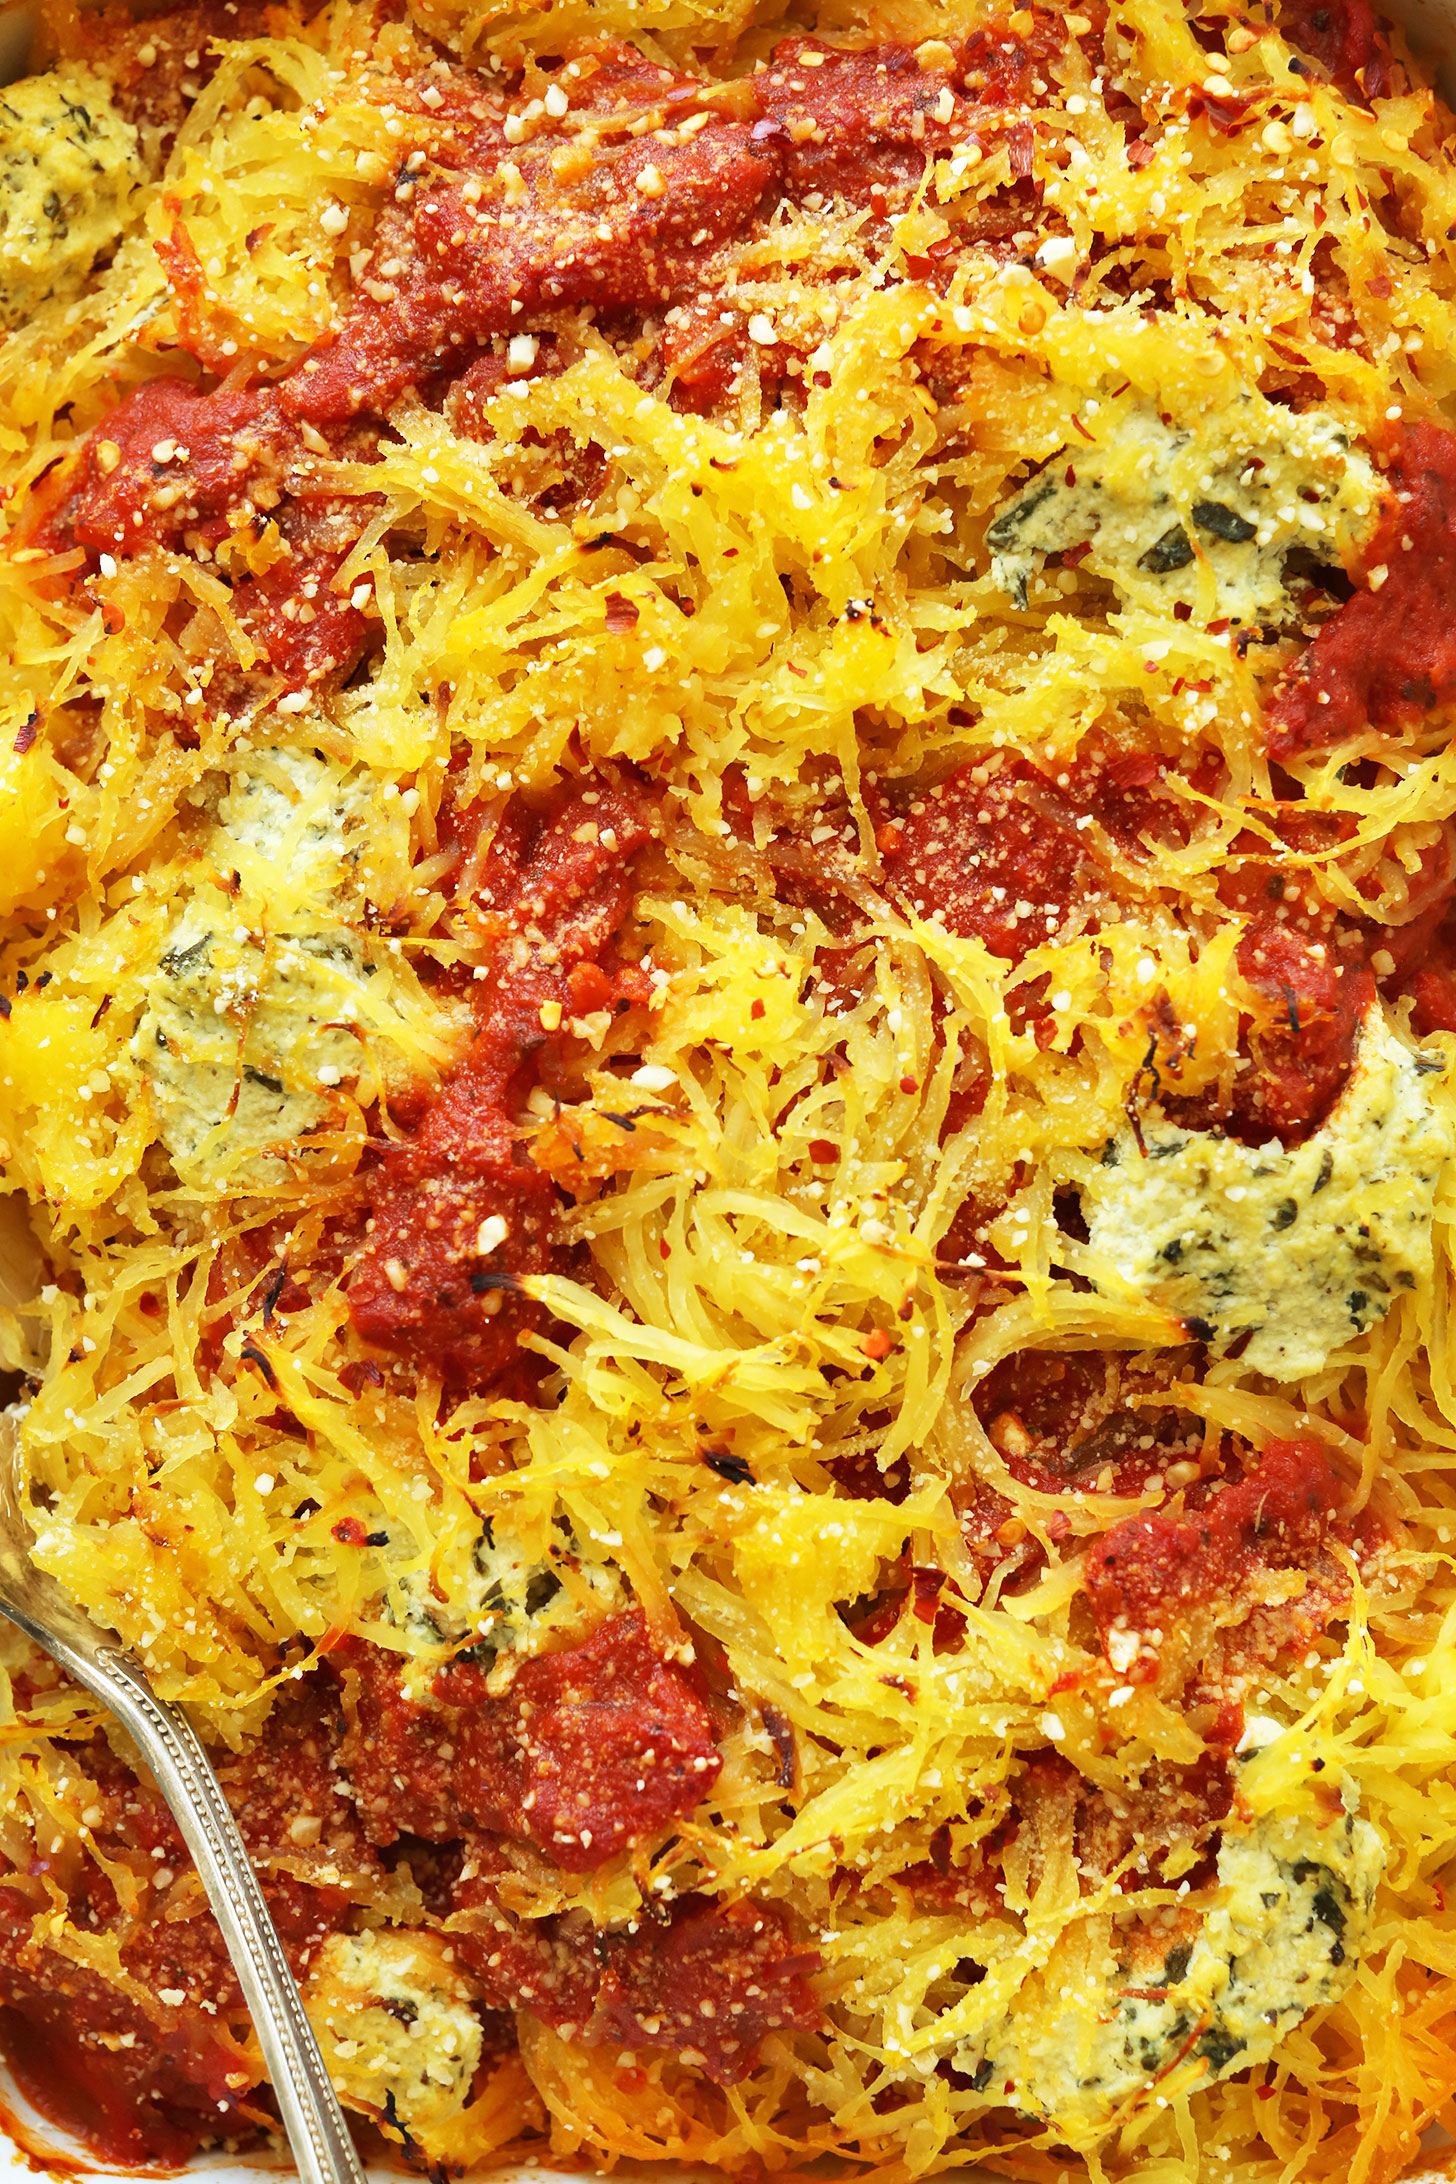 Our delicious gluten-free vegan Spaghetti Squash Lasagna Bake ready to go in the oven